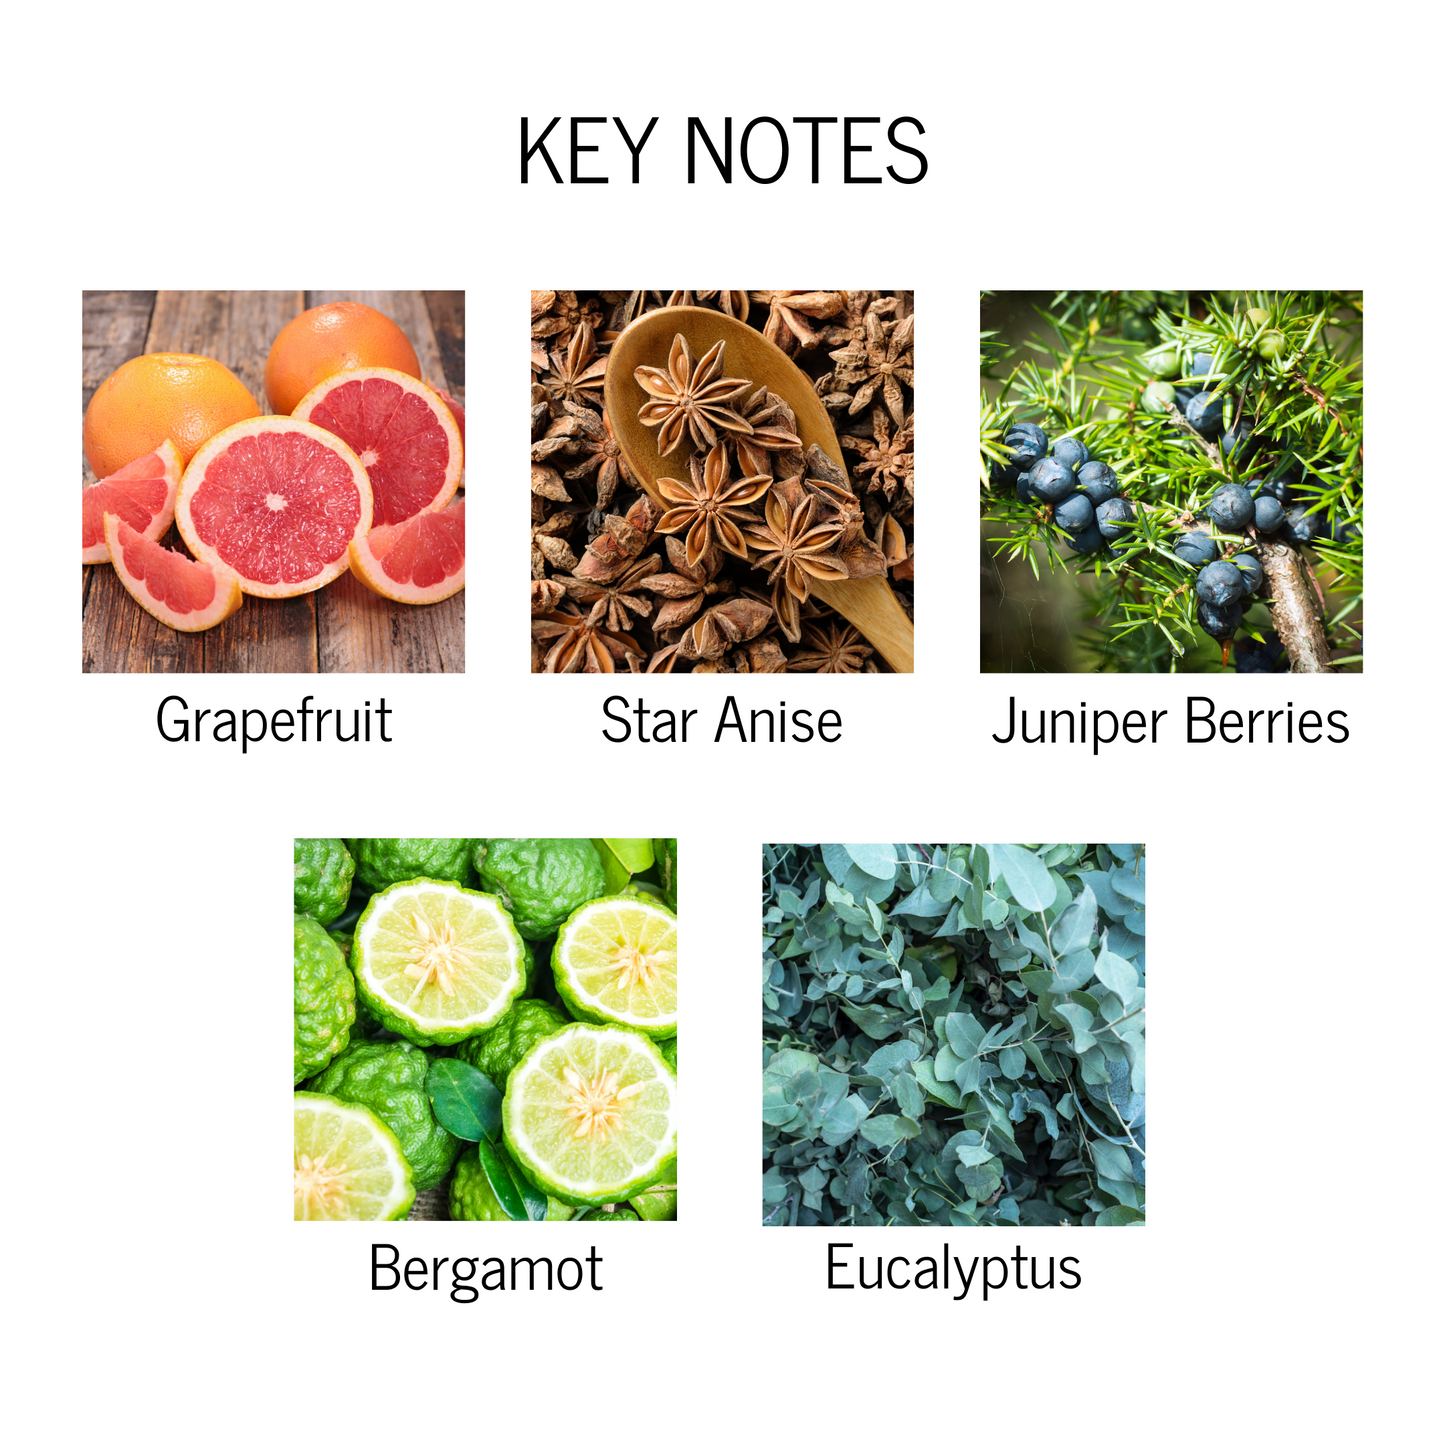 Key notes of grapefruit, star anise, juniper berries, bergamot, and eucalyptus.